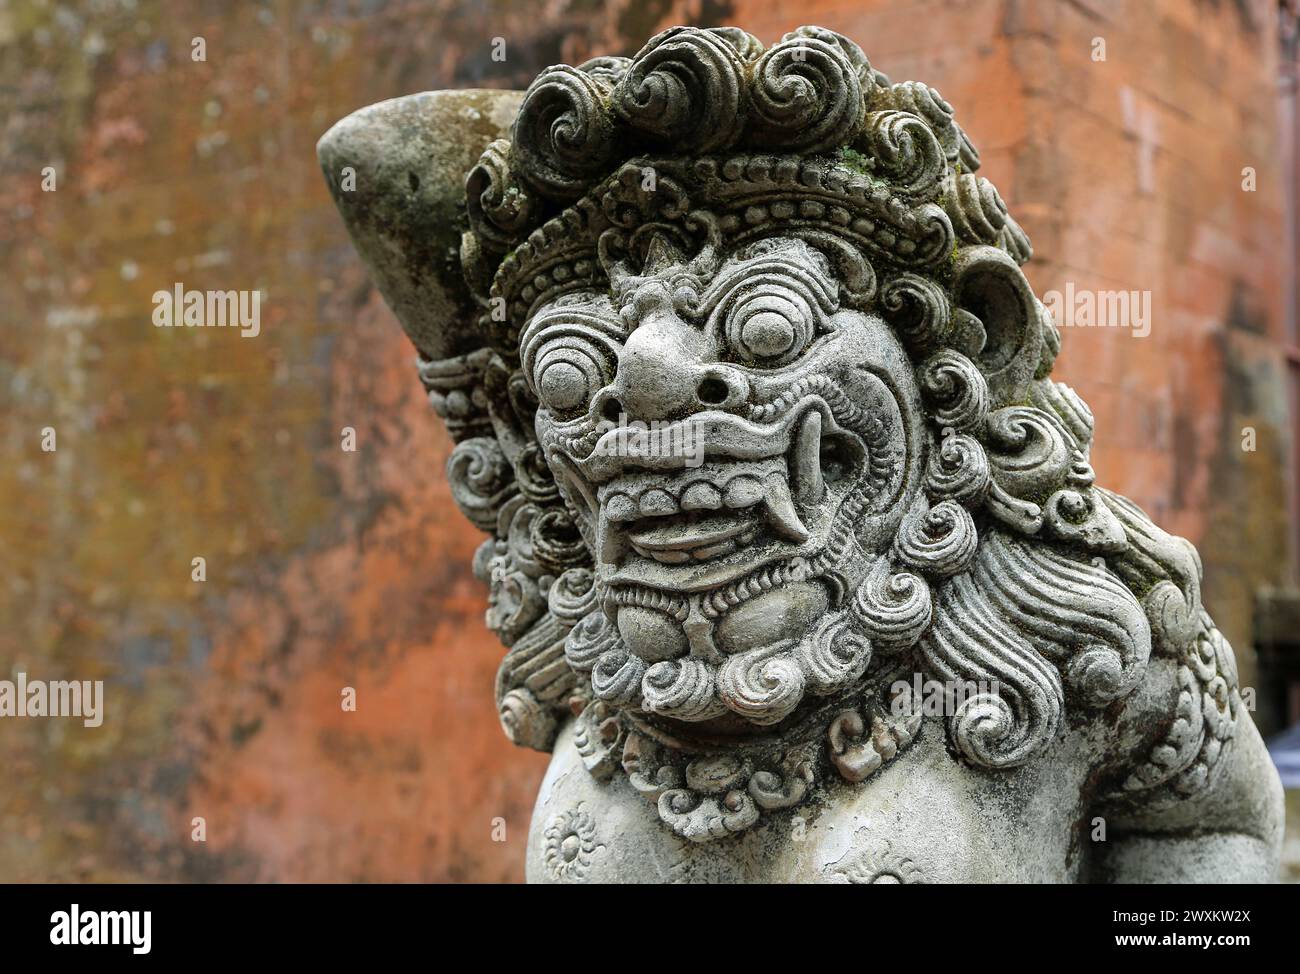 Sculpture in Puri Saren Agung - Ubud, Bali Stock Photo